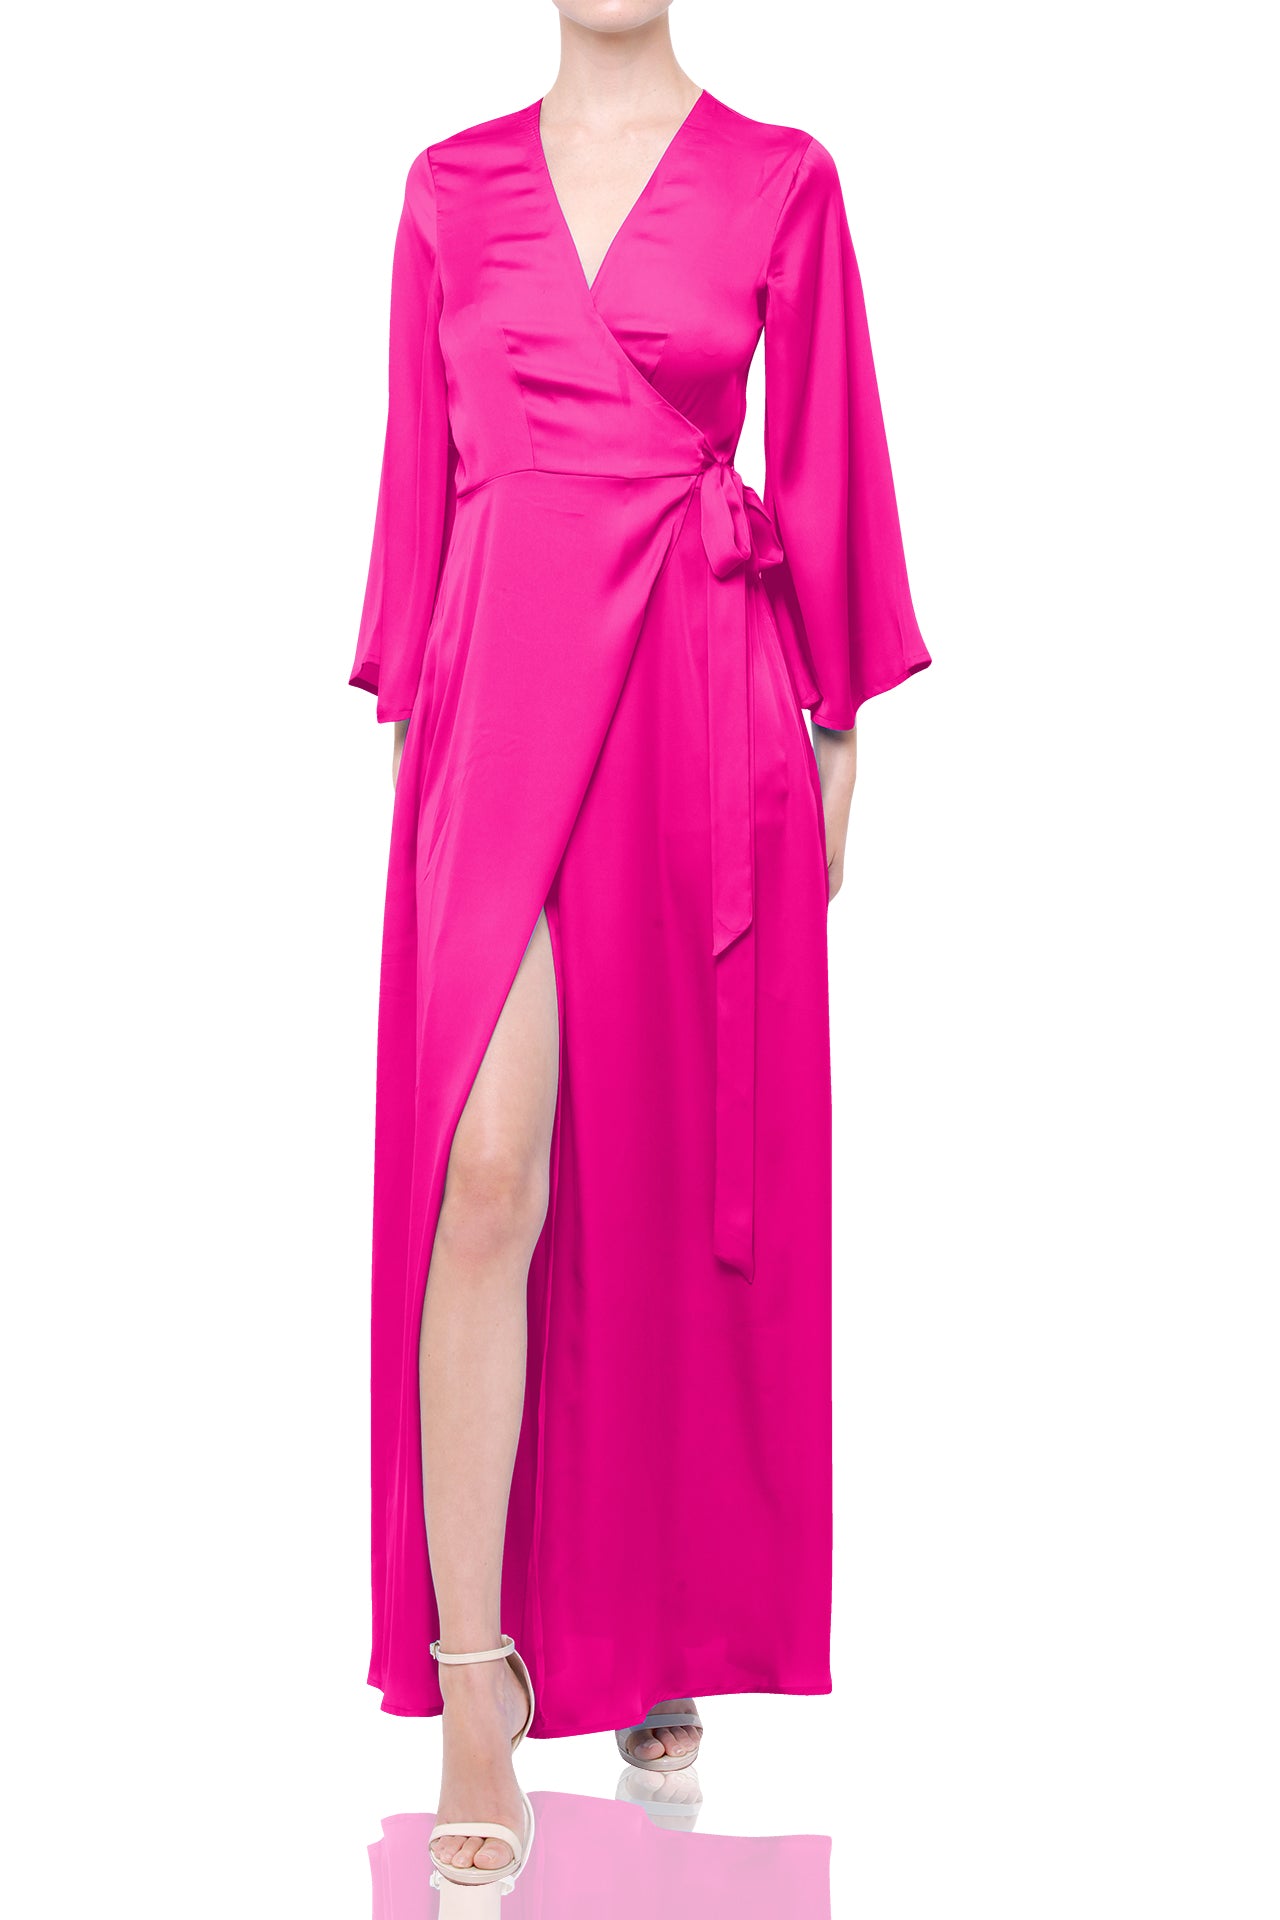 Designer Long Wrap Dress in Solid Fuchsia Fedora